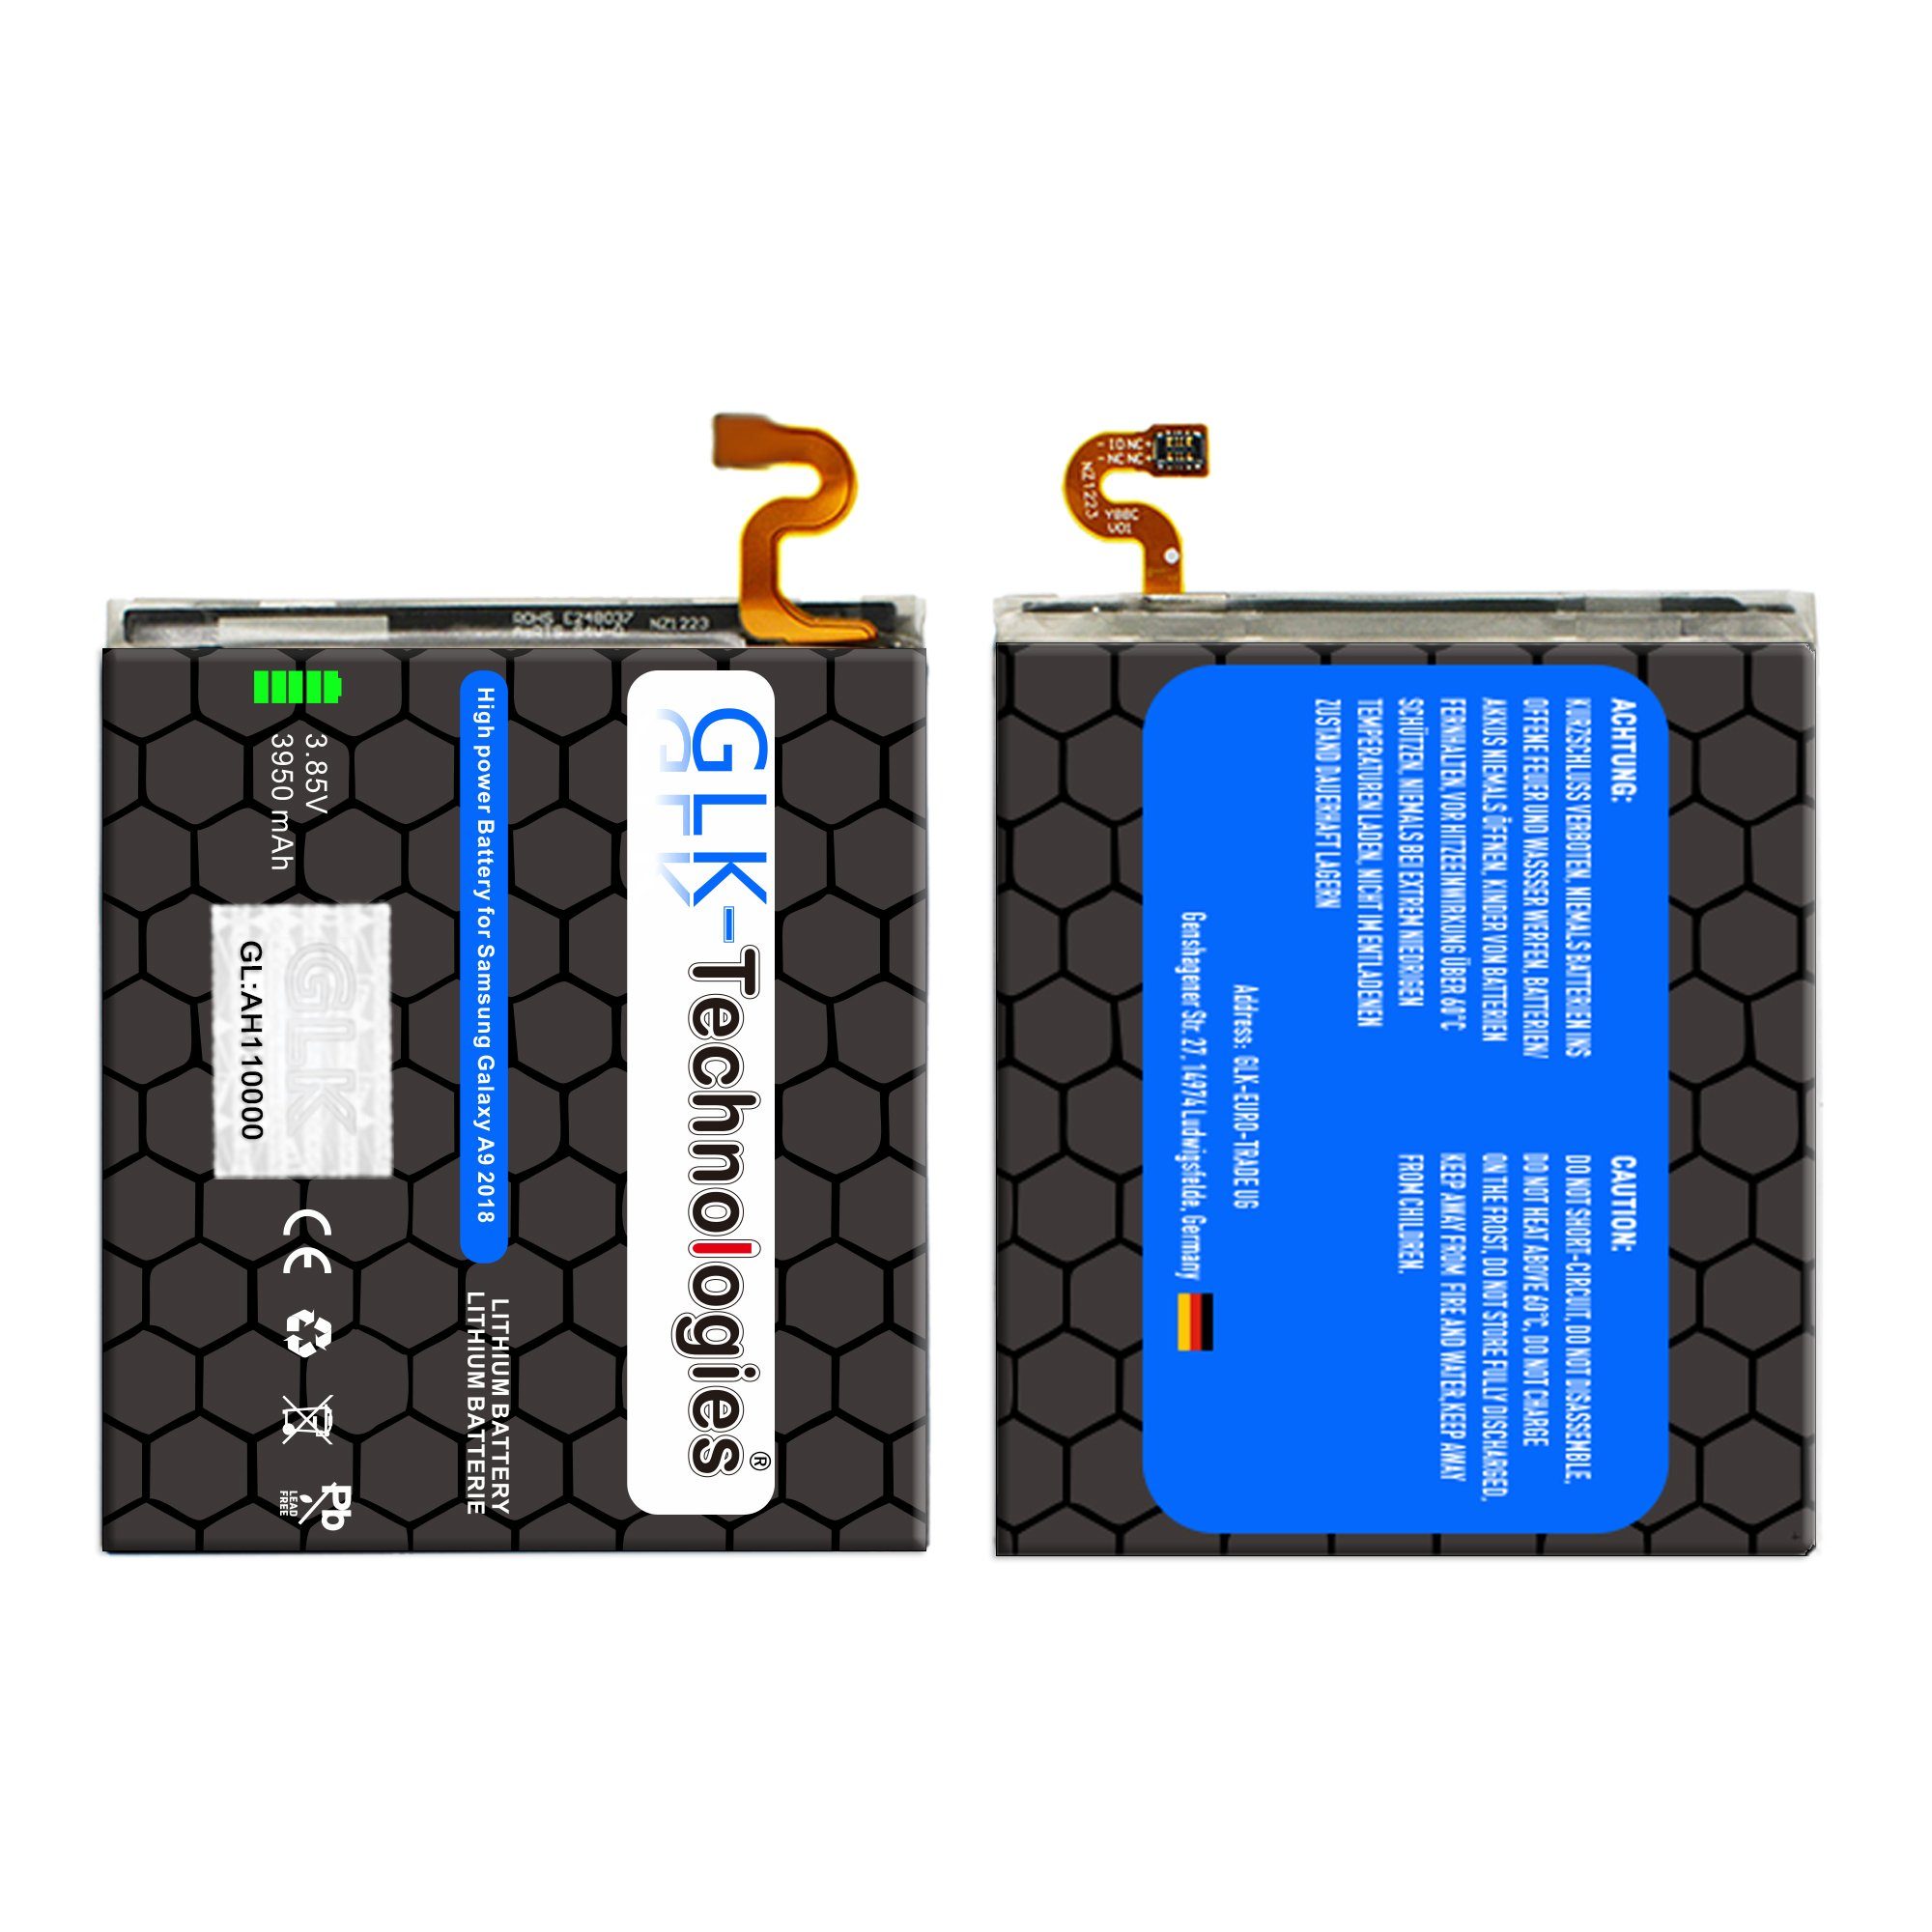 Battery, 3950 Power GLK-Technologies mit Smartphone-Akku EB-BA920ABU, 2018 3950mAh, High Ersatz A920F accu, (3.8 inkl. Galaxy V) mAh GLK-Technologies Set Kit kompatibel Akku A9 Werkzeug Samsung